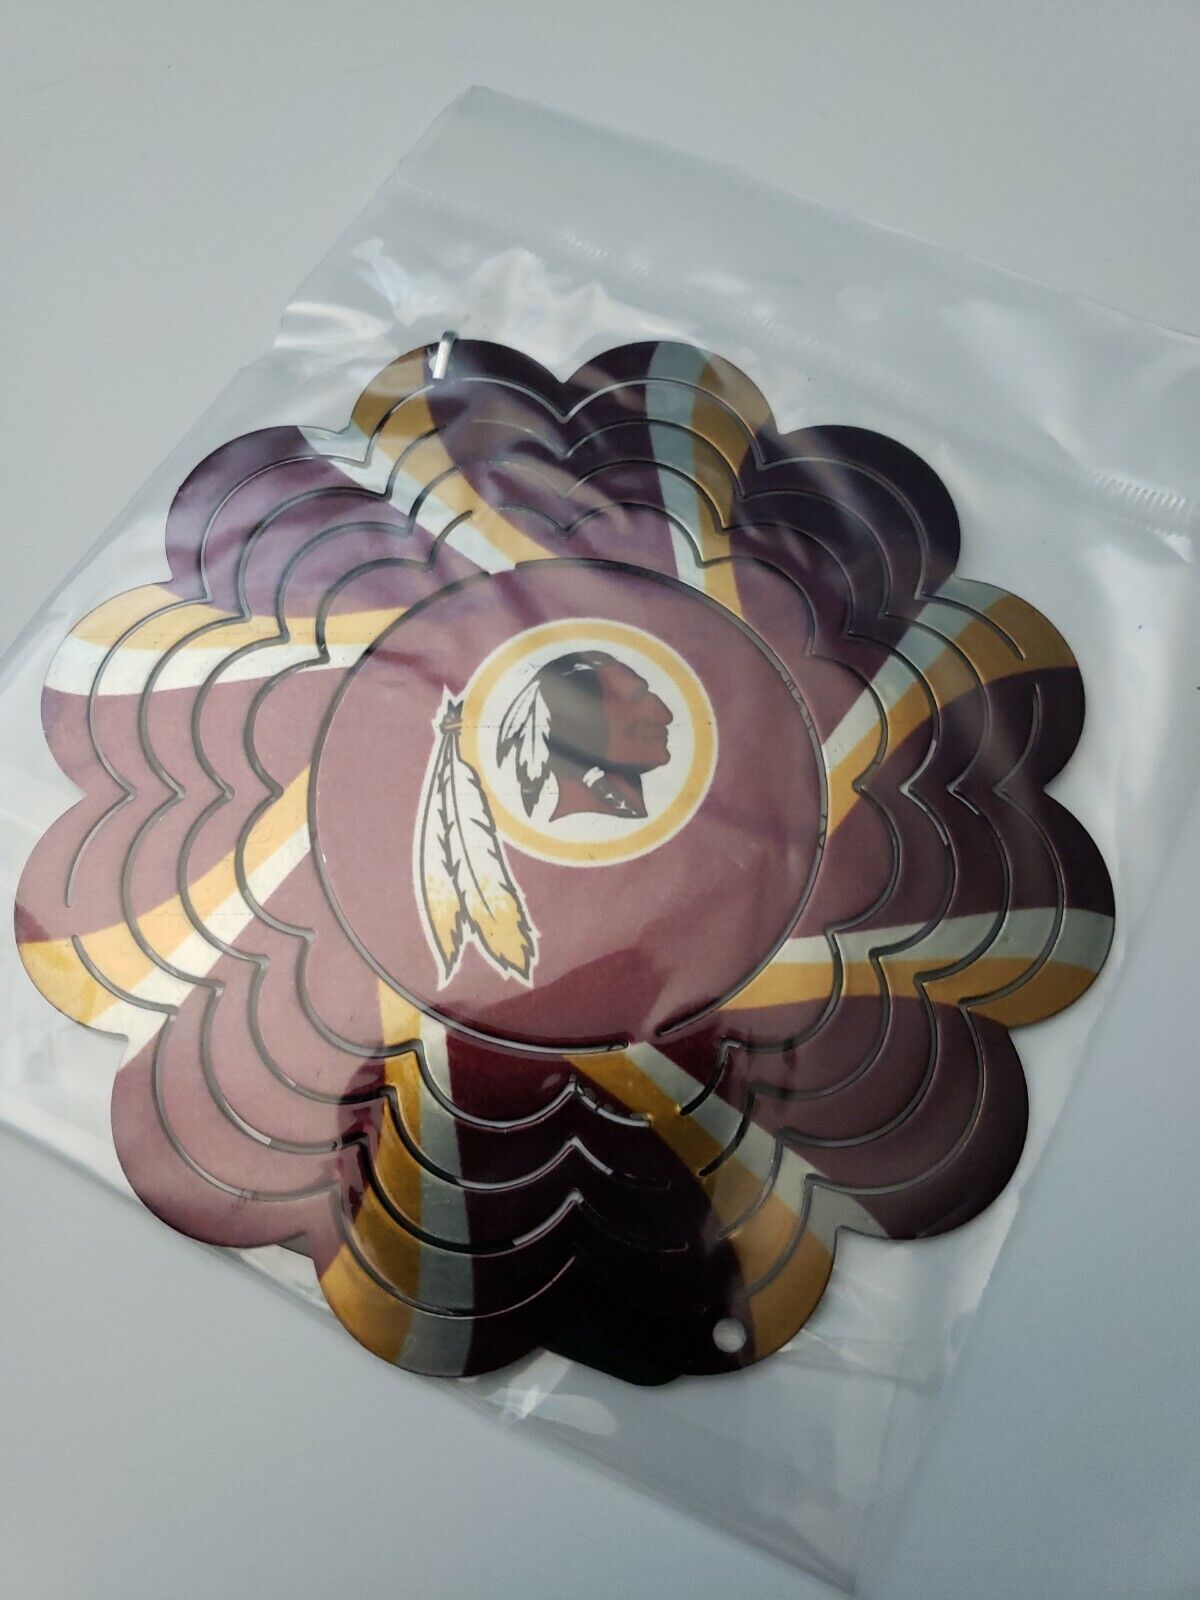 Washington Redskins Spectrum Spinner Ornament - New In Package